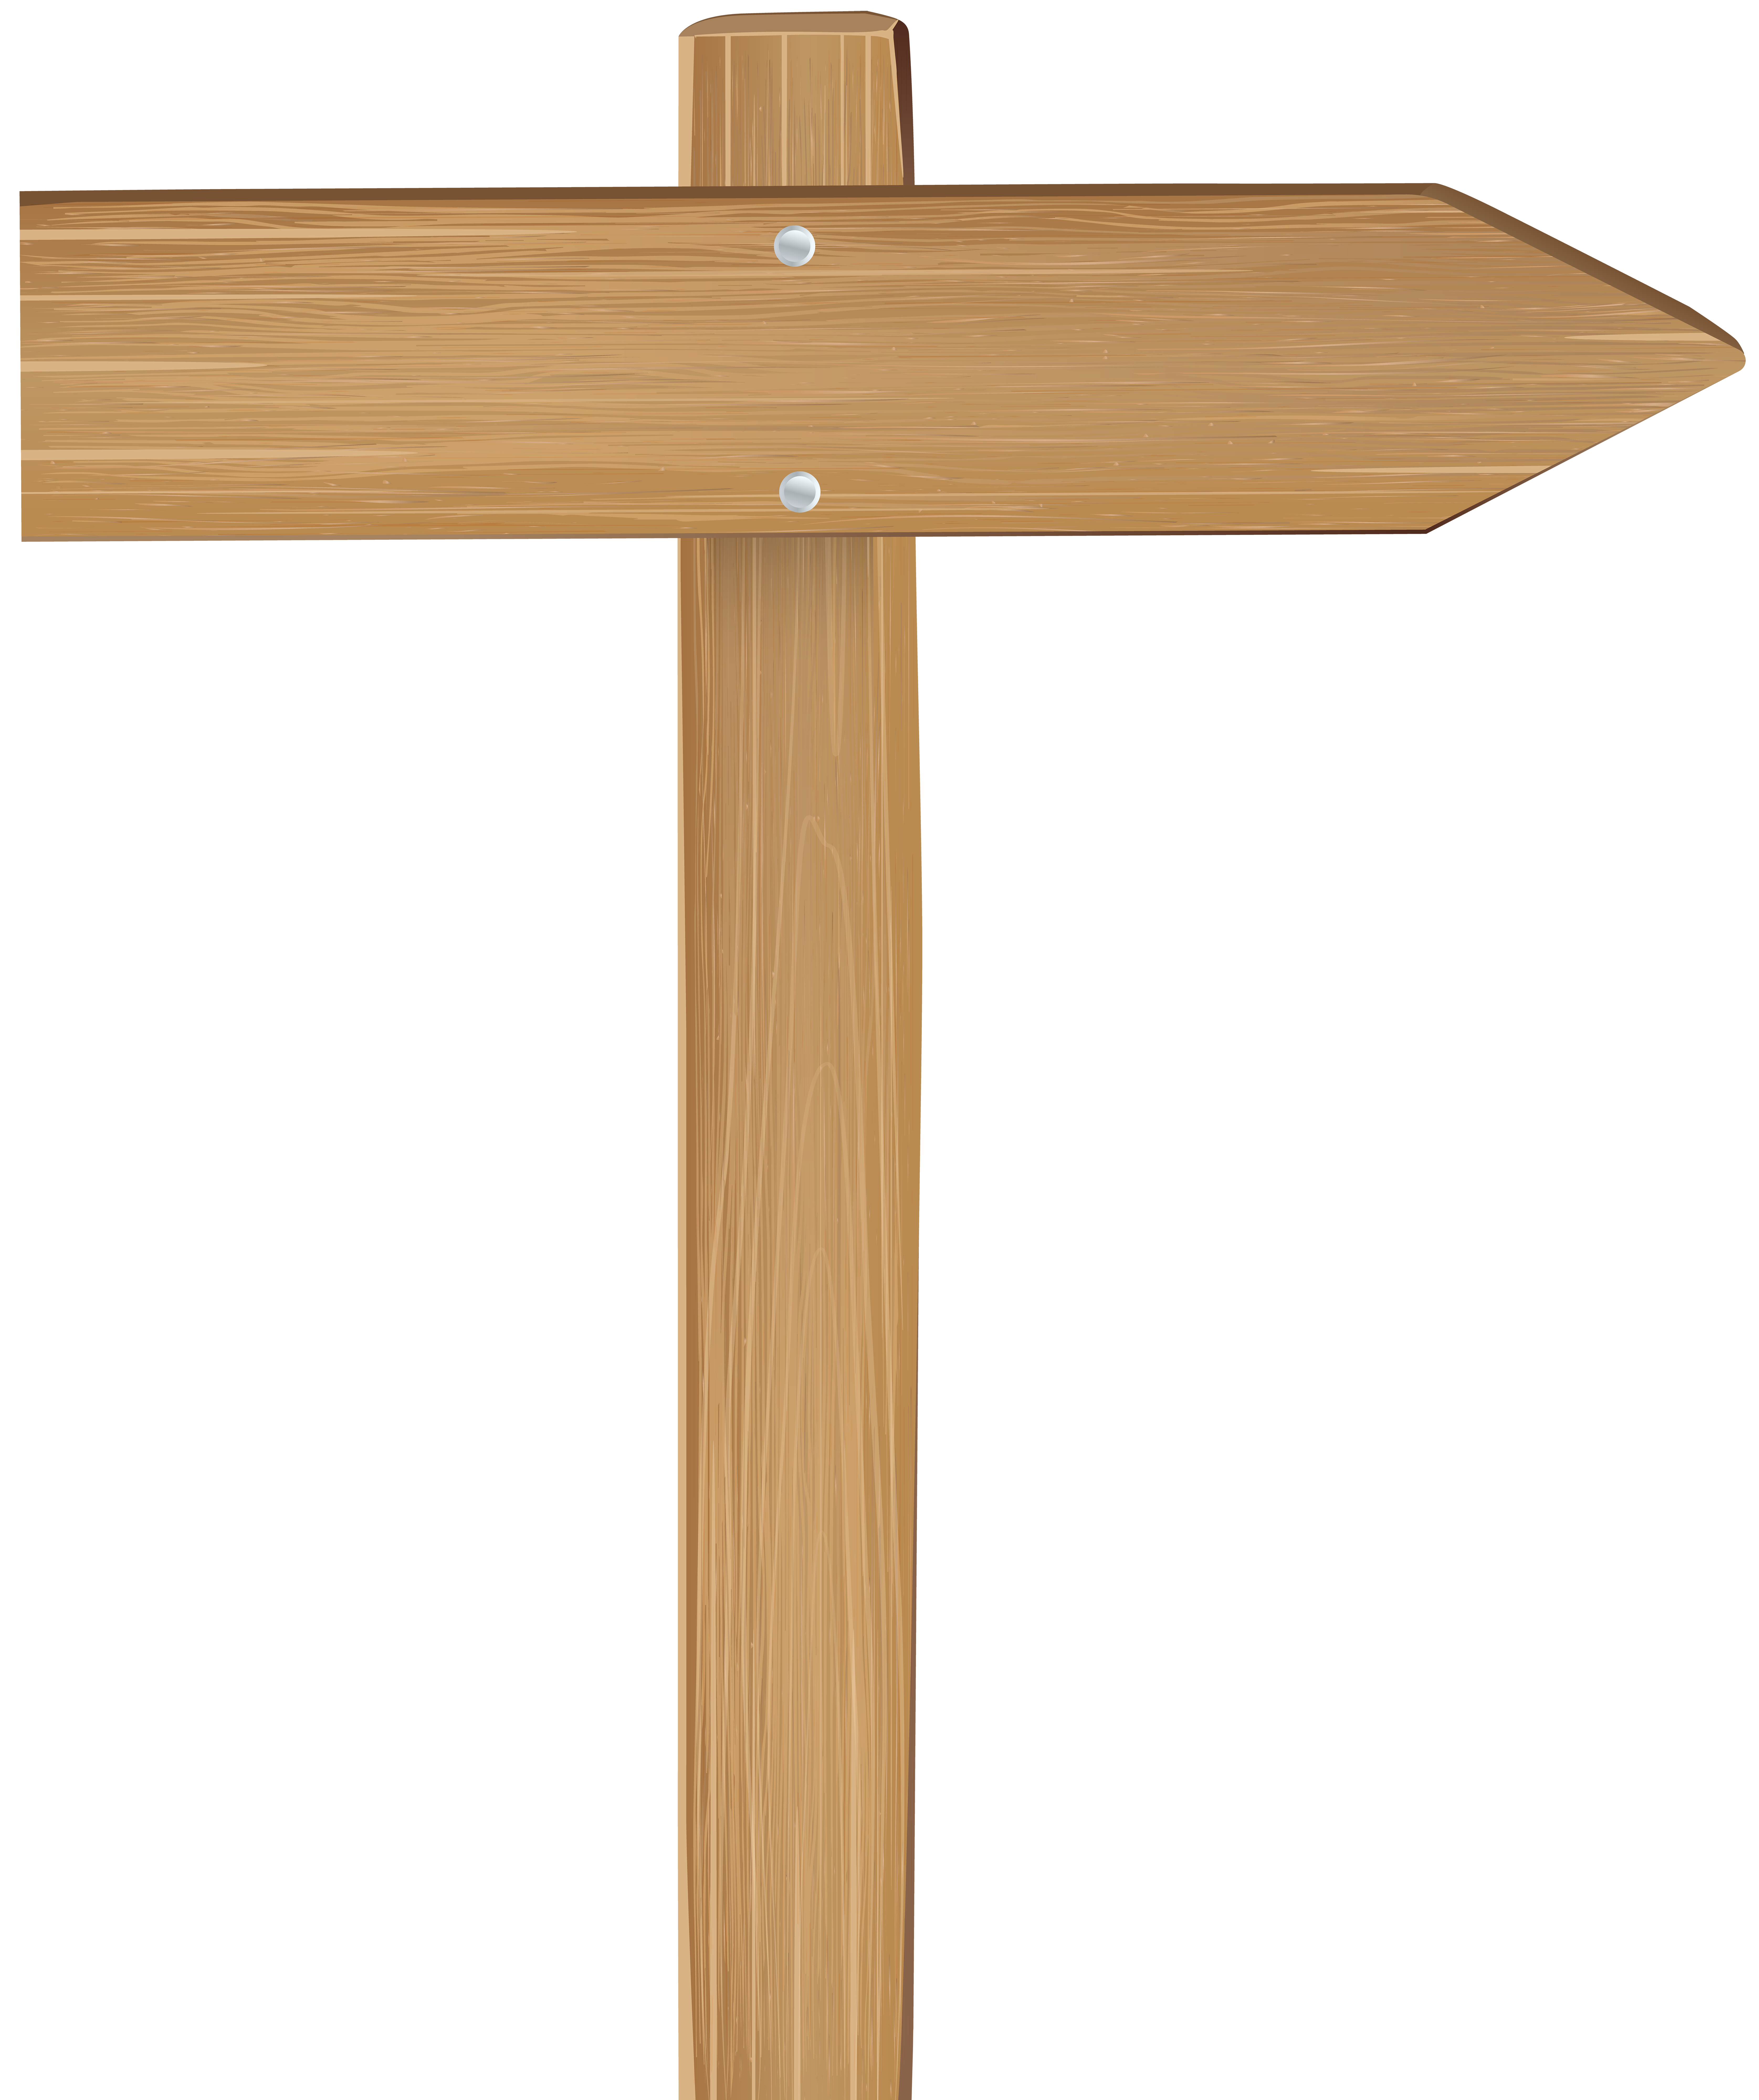 Wooden Arrow Sign PNG Clip Art Image.